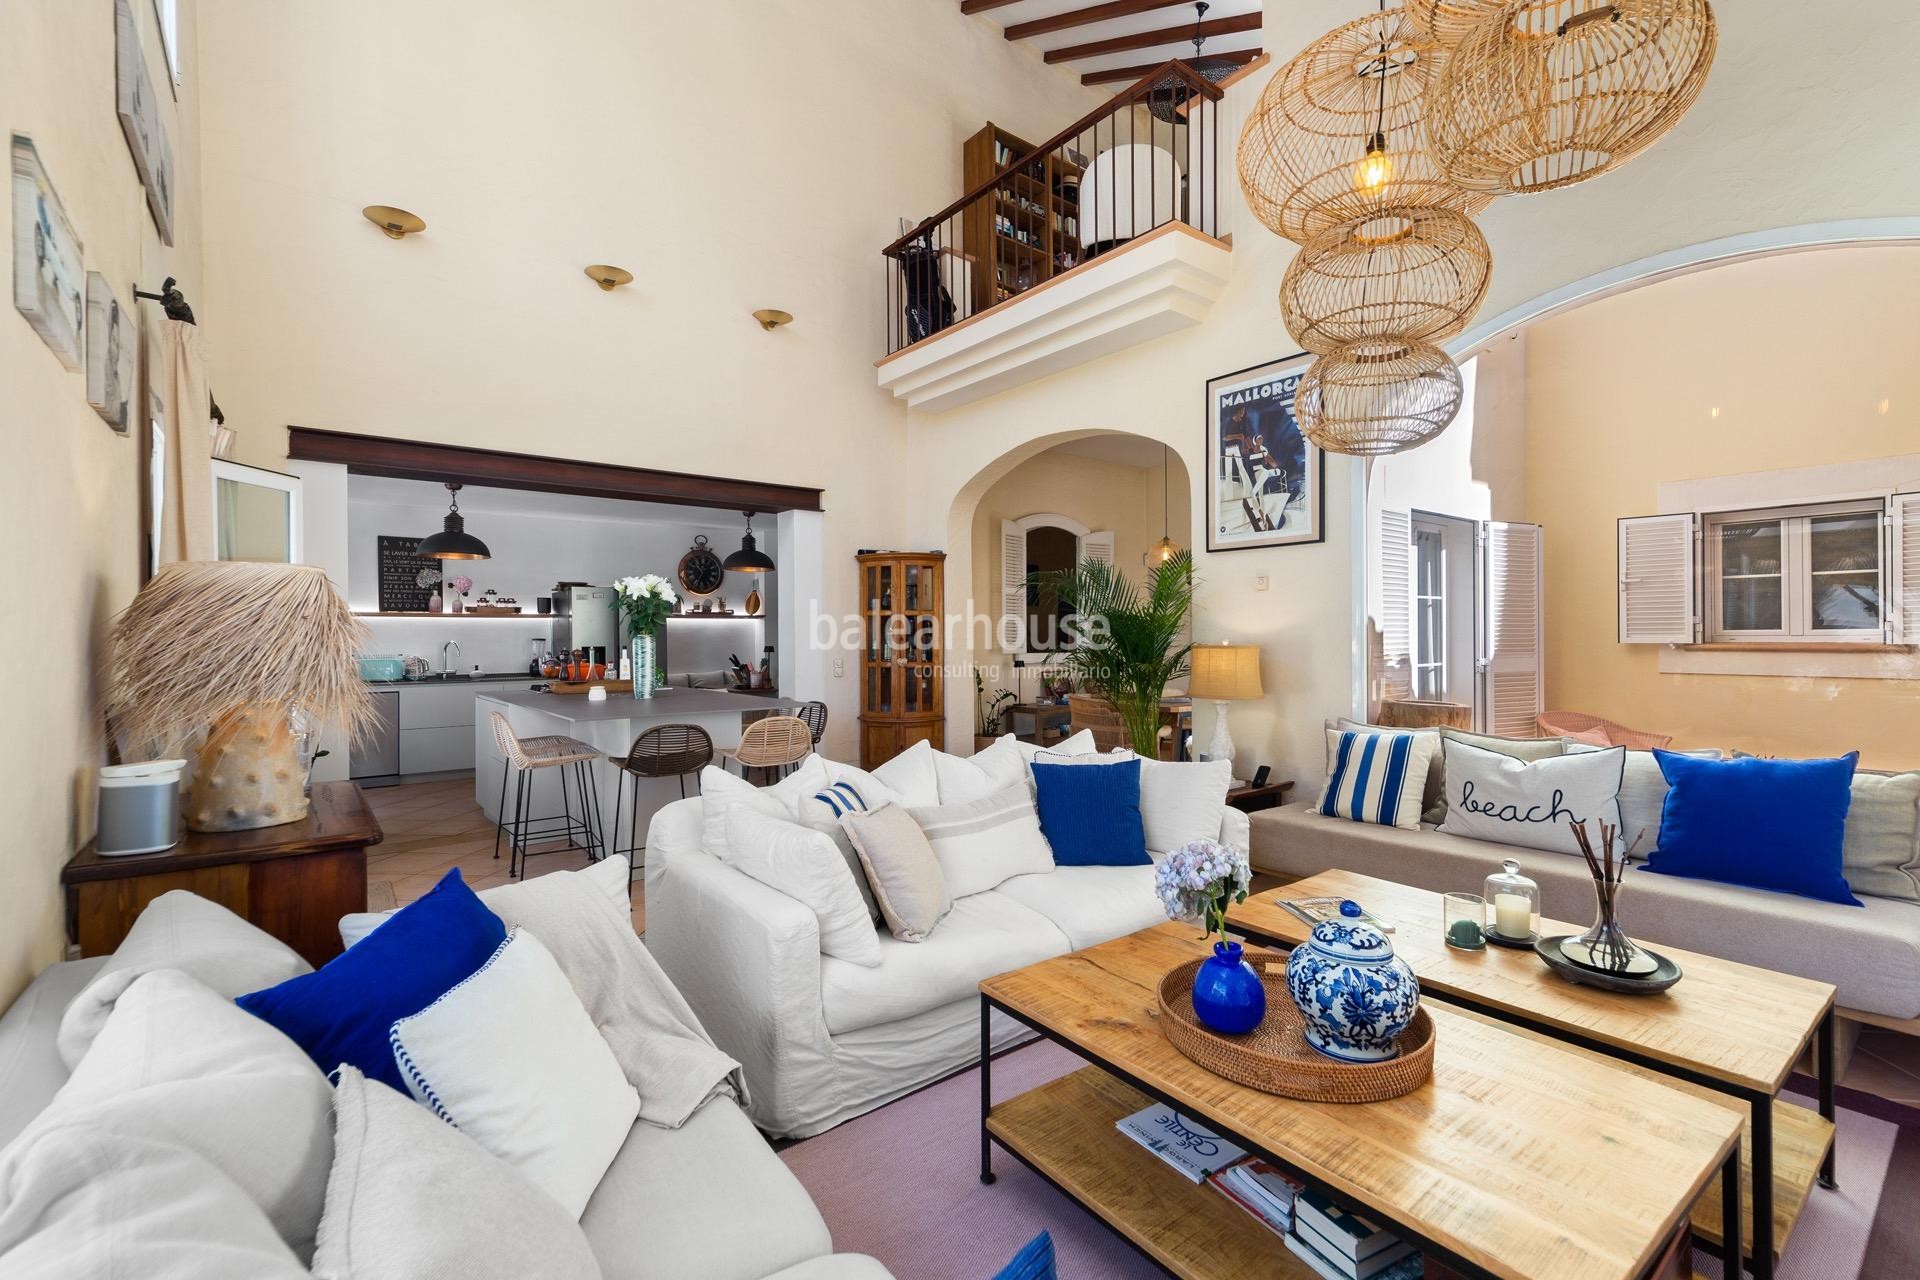 Preciosa villa de estilo mediterráneo perfecta para familias en Nova Santa Ponsa